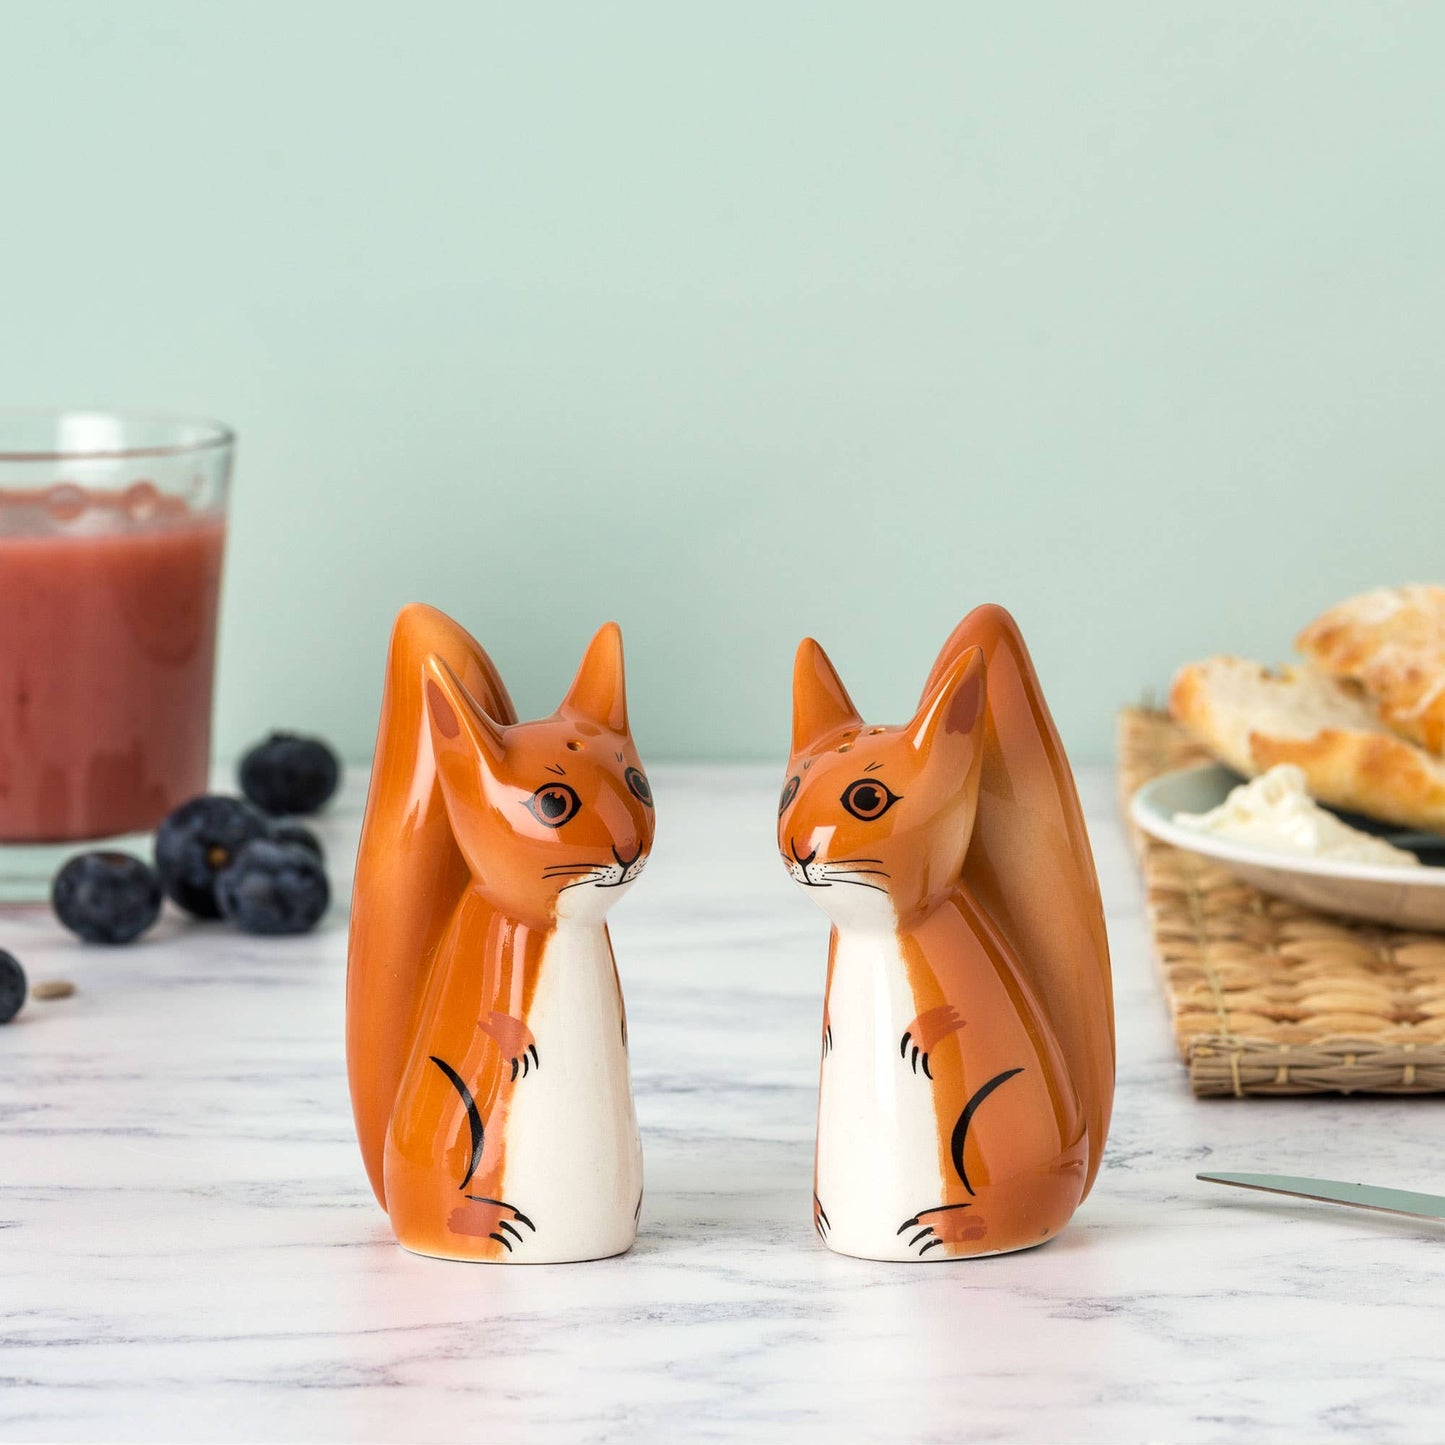 Handmade Ceramic Squirrel Salt and Pepper Shakers